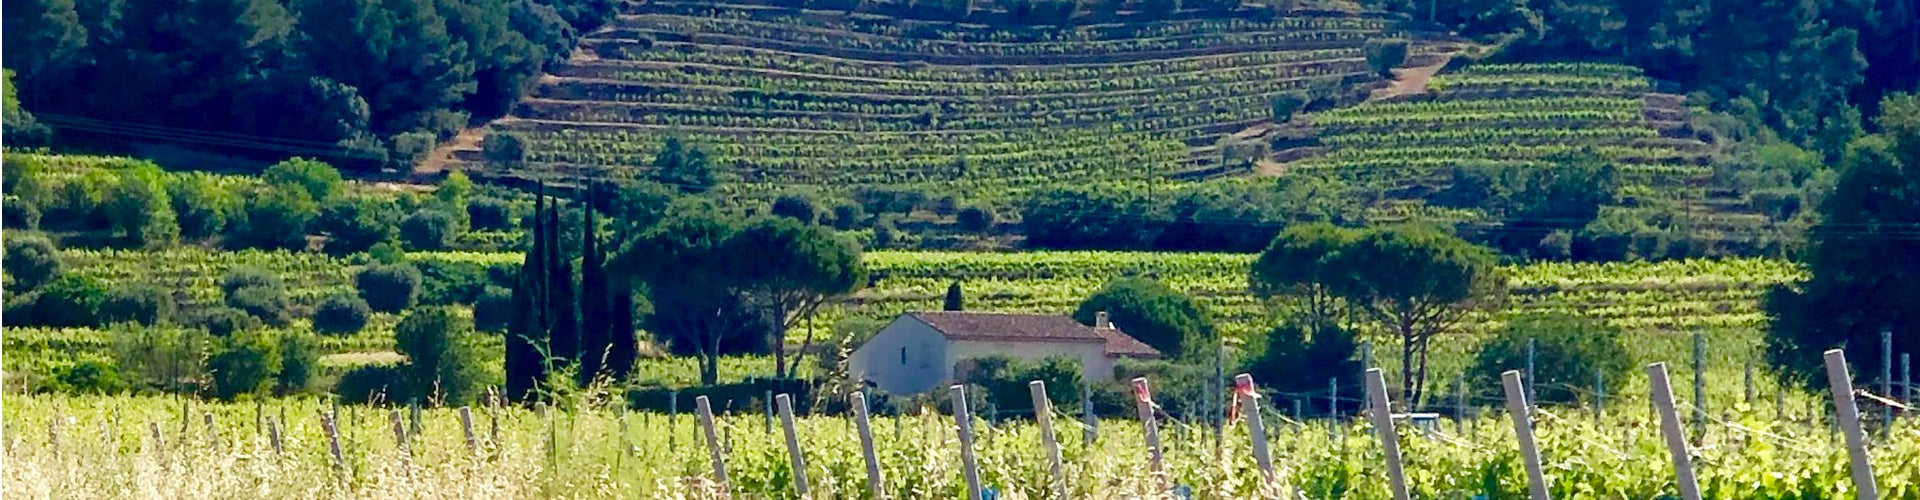 Domaine Tempier Vineyards Cabassaou & Tourtine